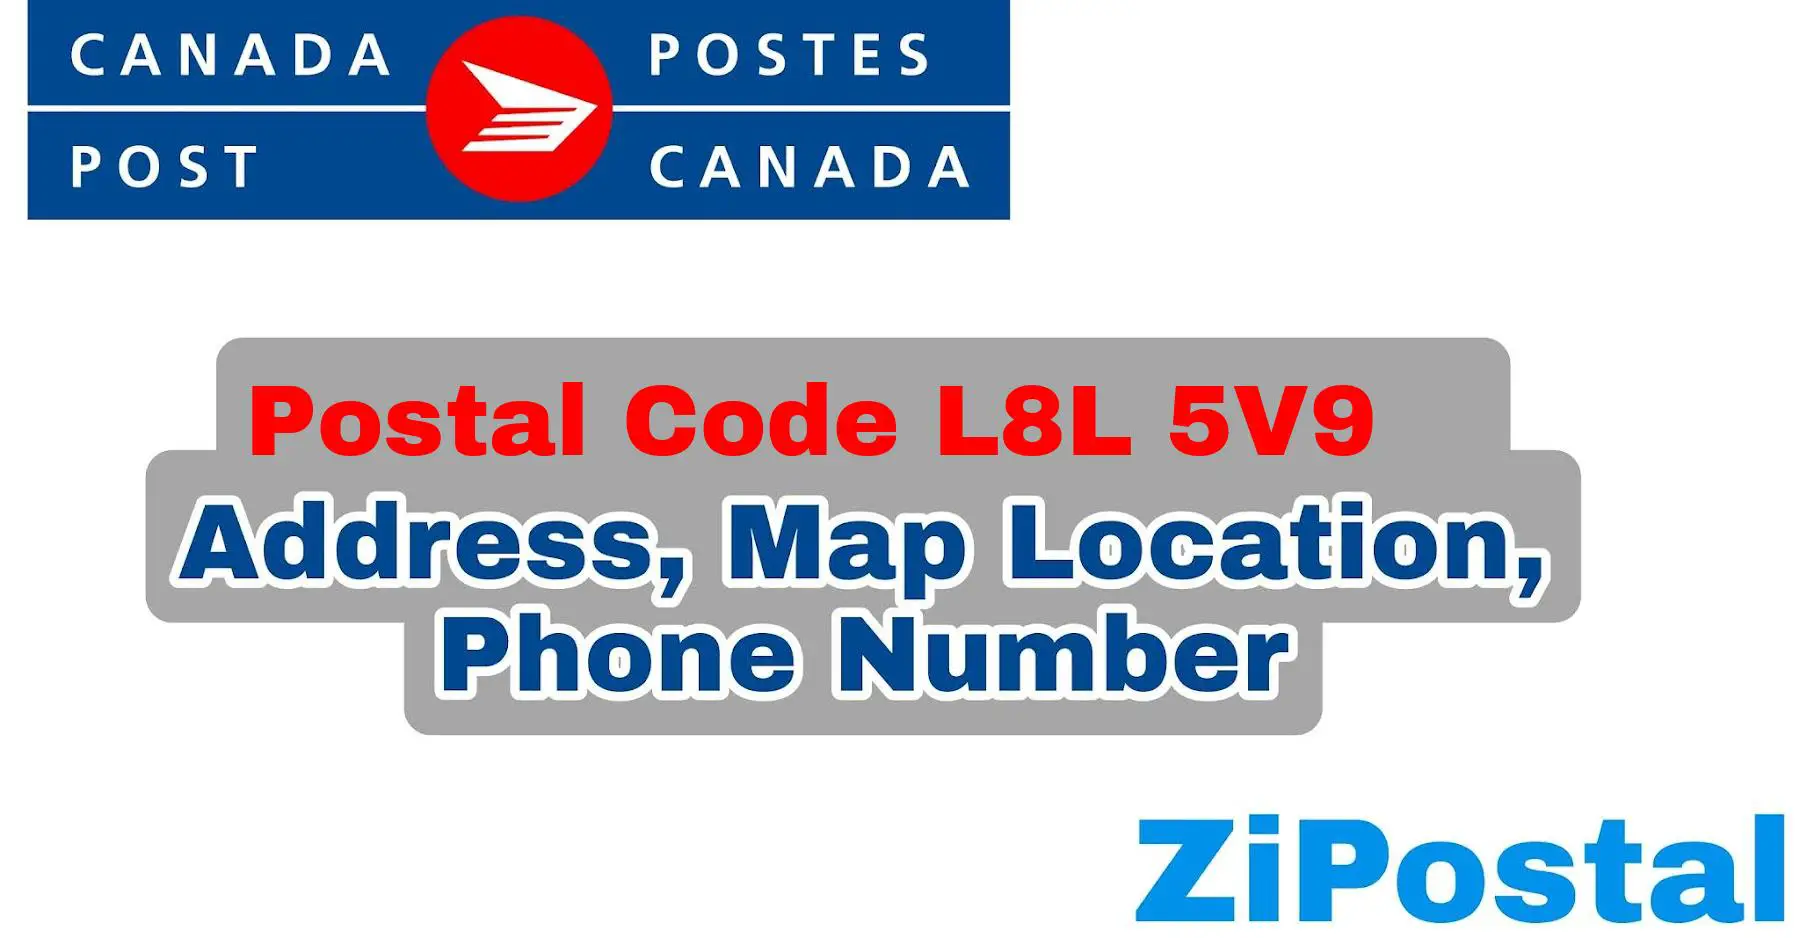 Postal Code L8L 5V9 Address Map Location and Phone Number